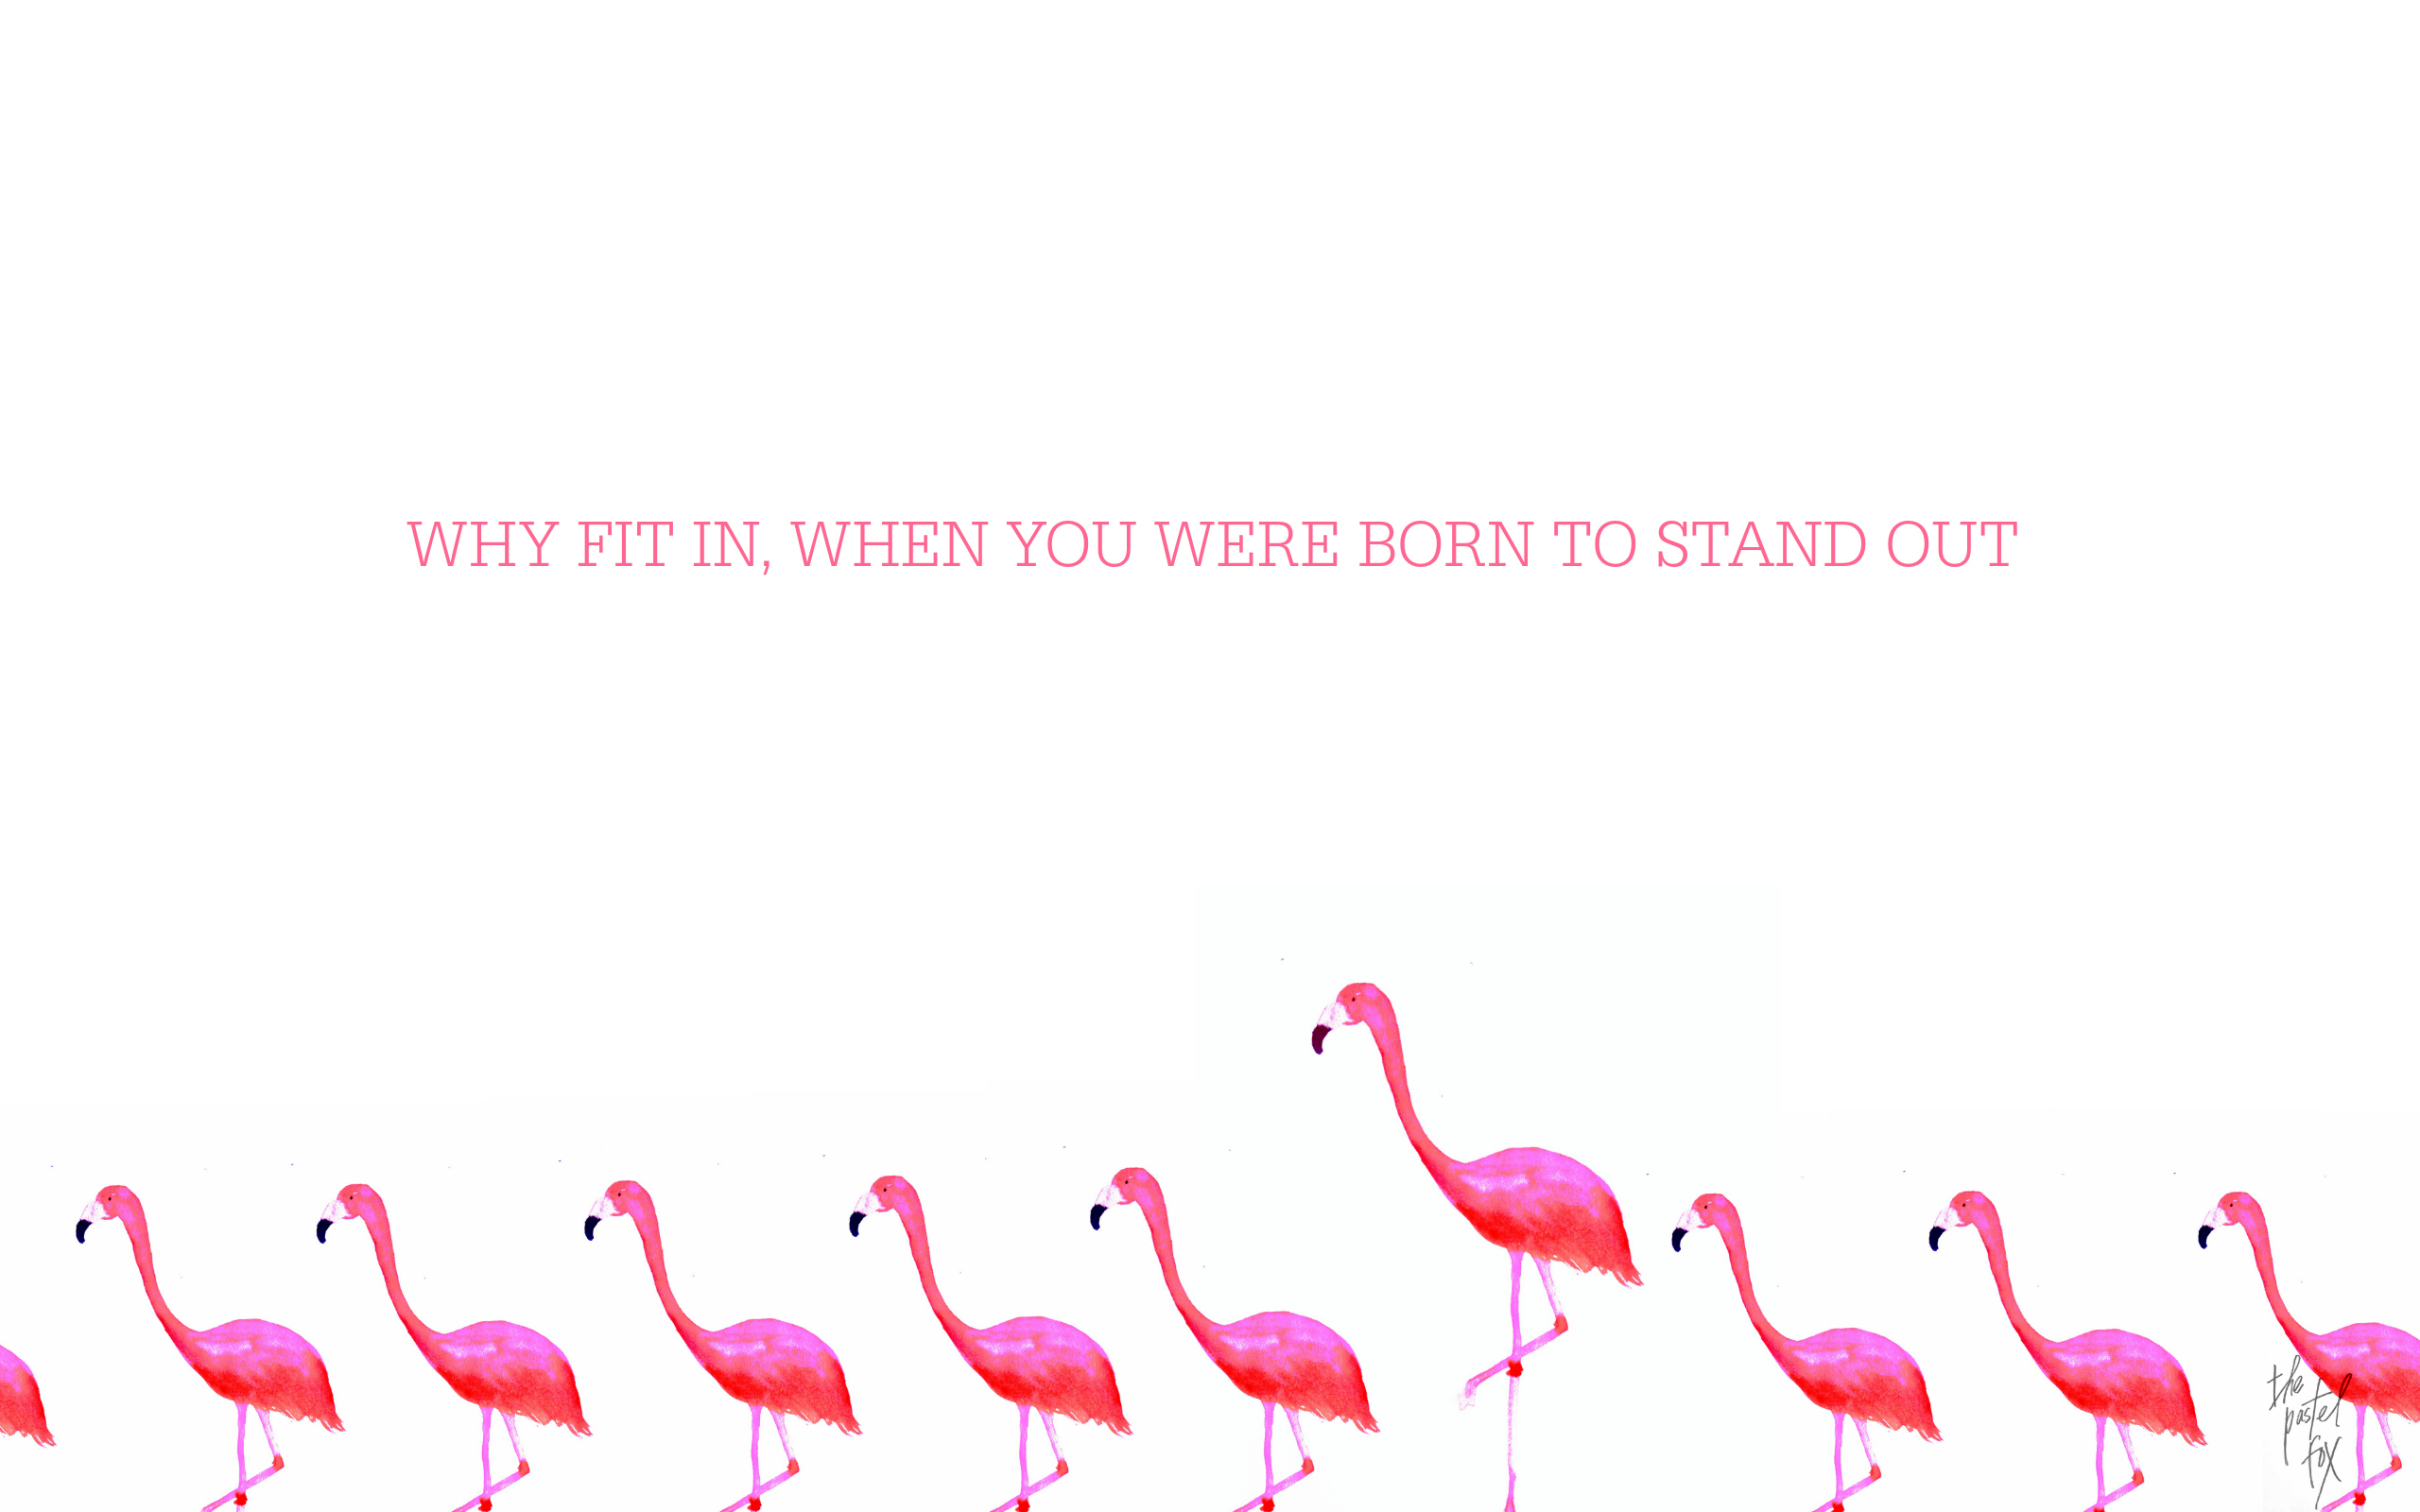 Download Flamingo Wallpaper